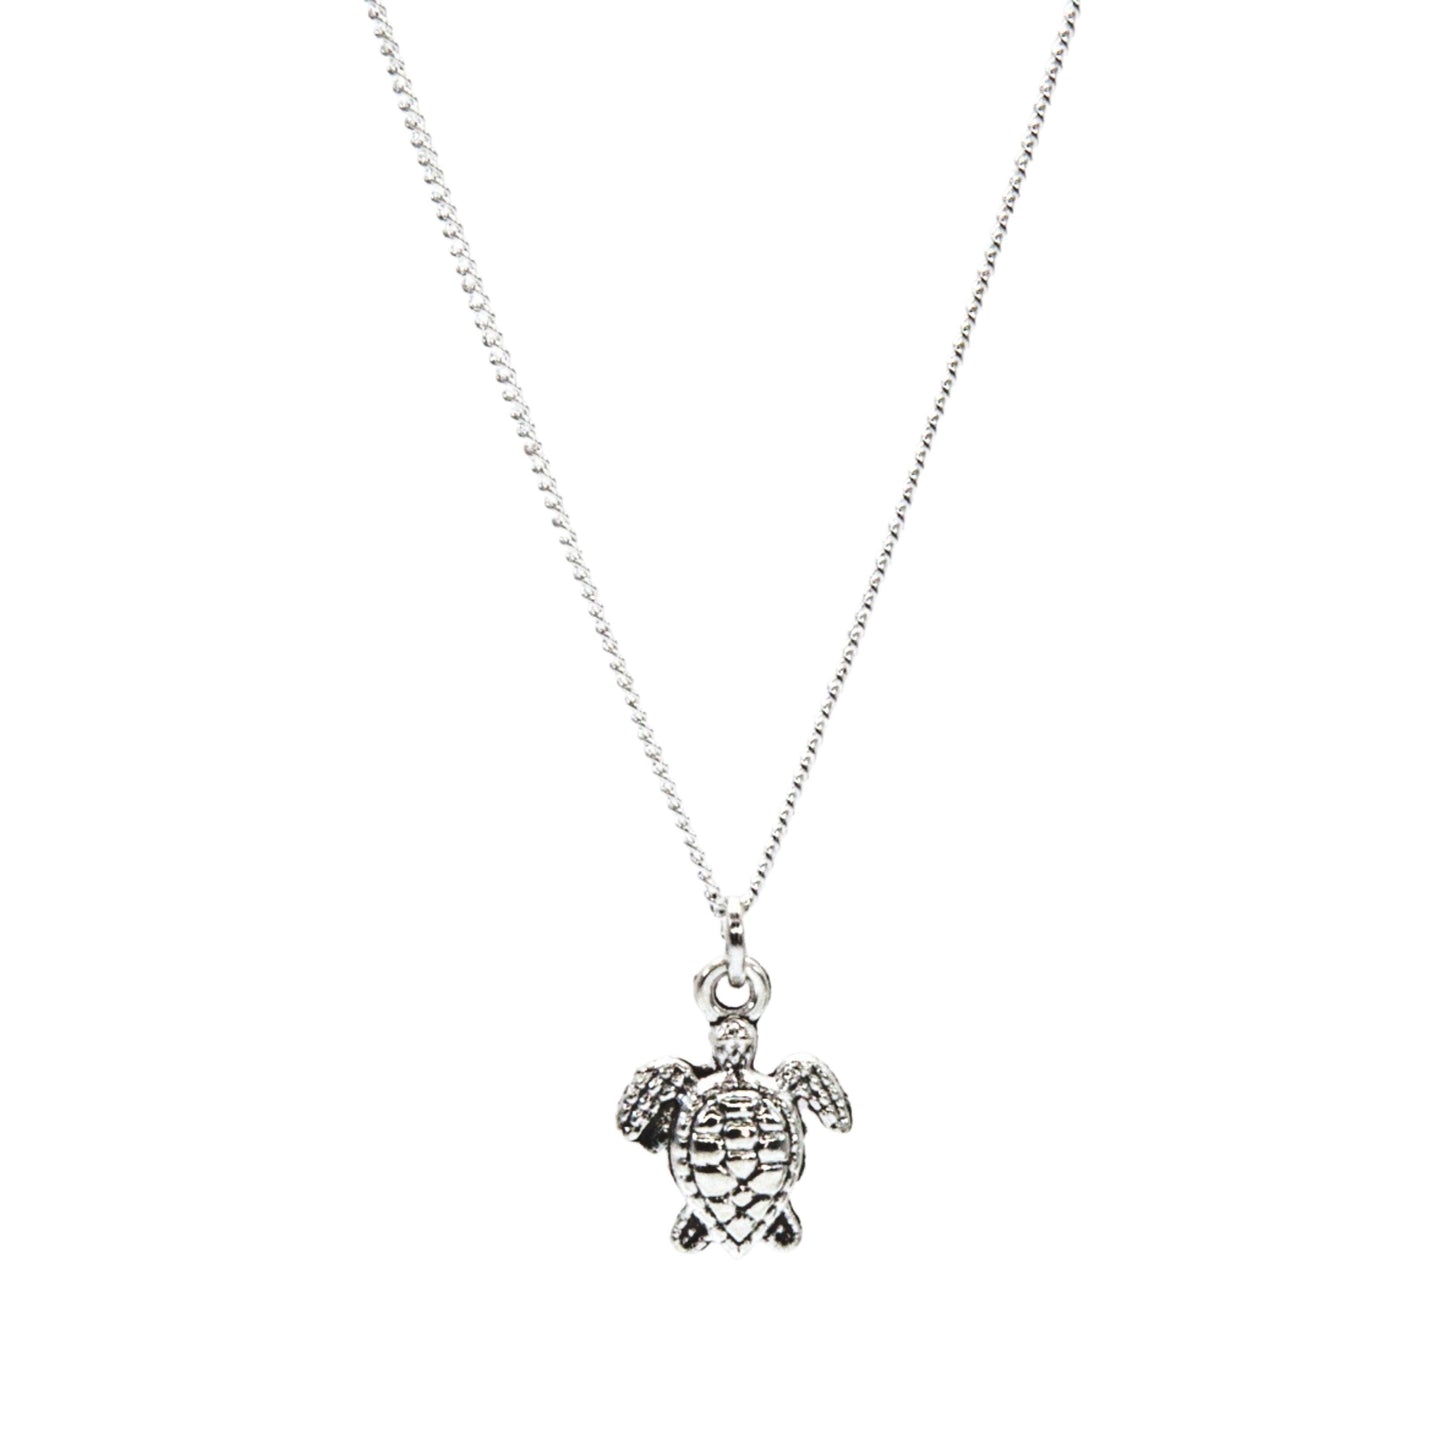 Silver Sea Turtle Necklace - Adjustable Length